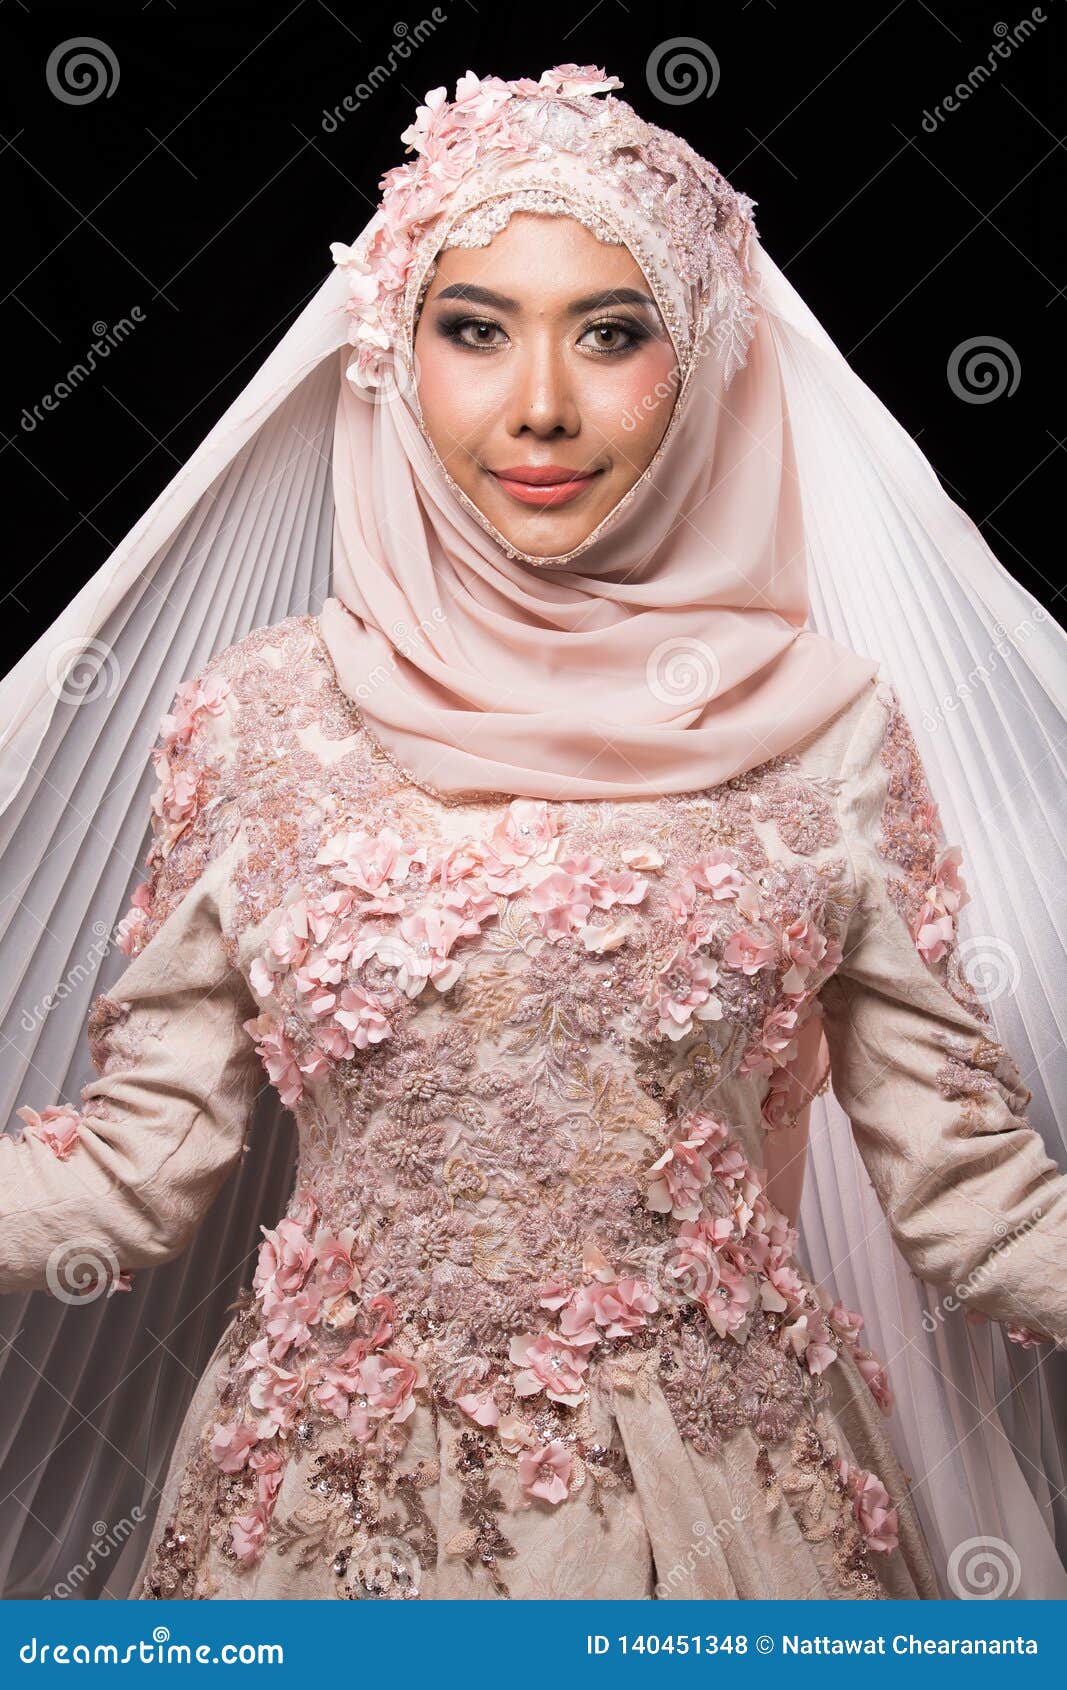 luxury high neck abaya muslim wedding| Alibaba.com